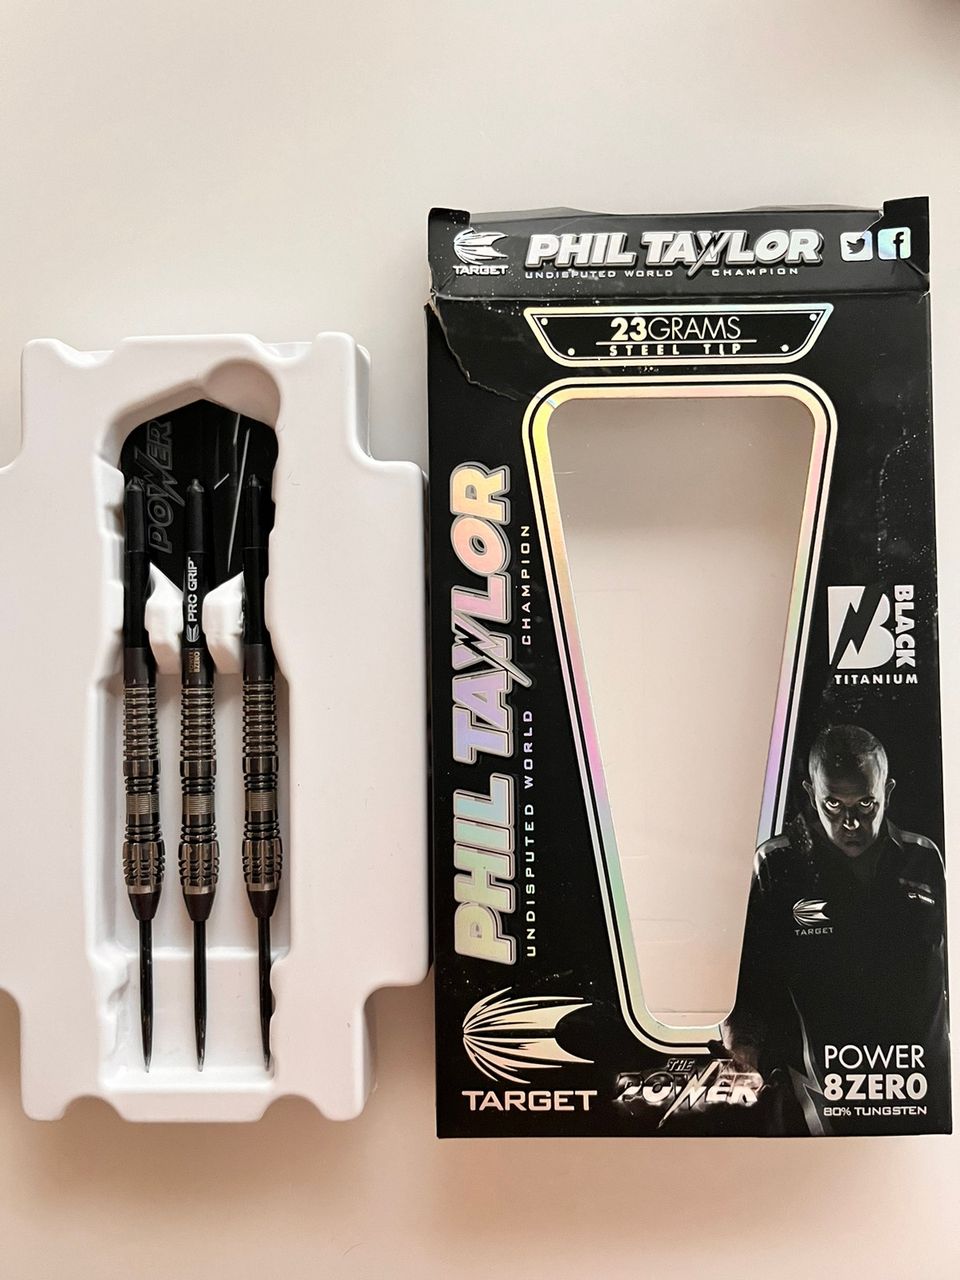 Target Phil Taylor Power 8-Zero 23g Darts tikat